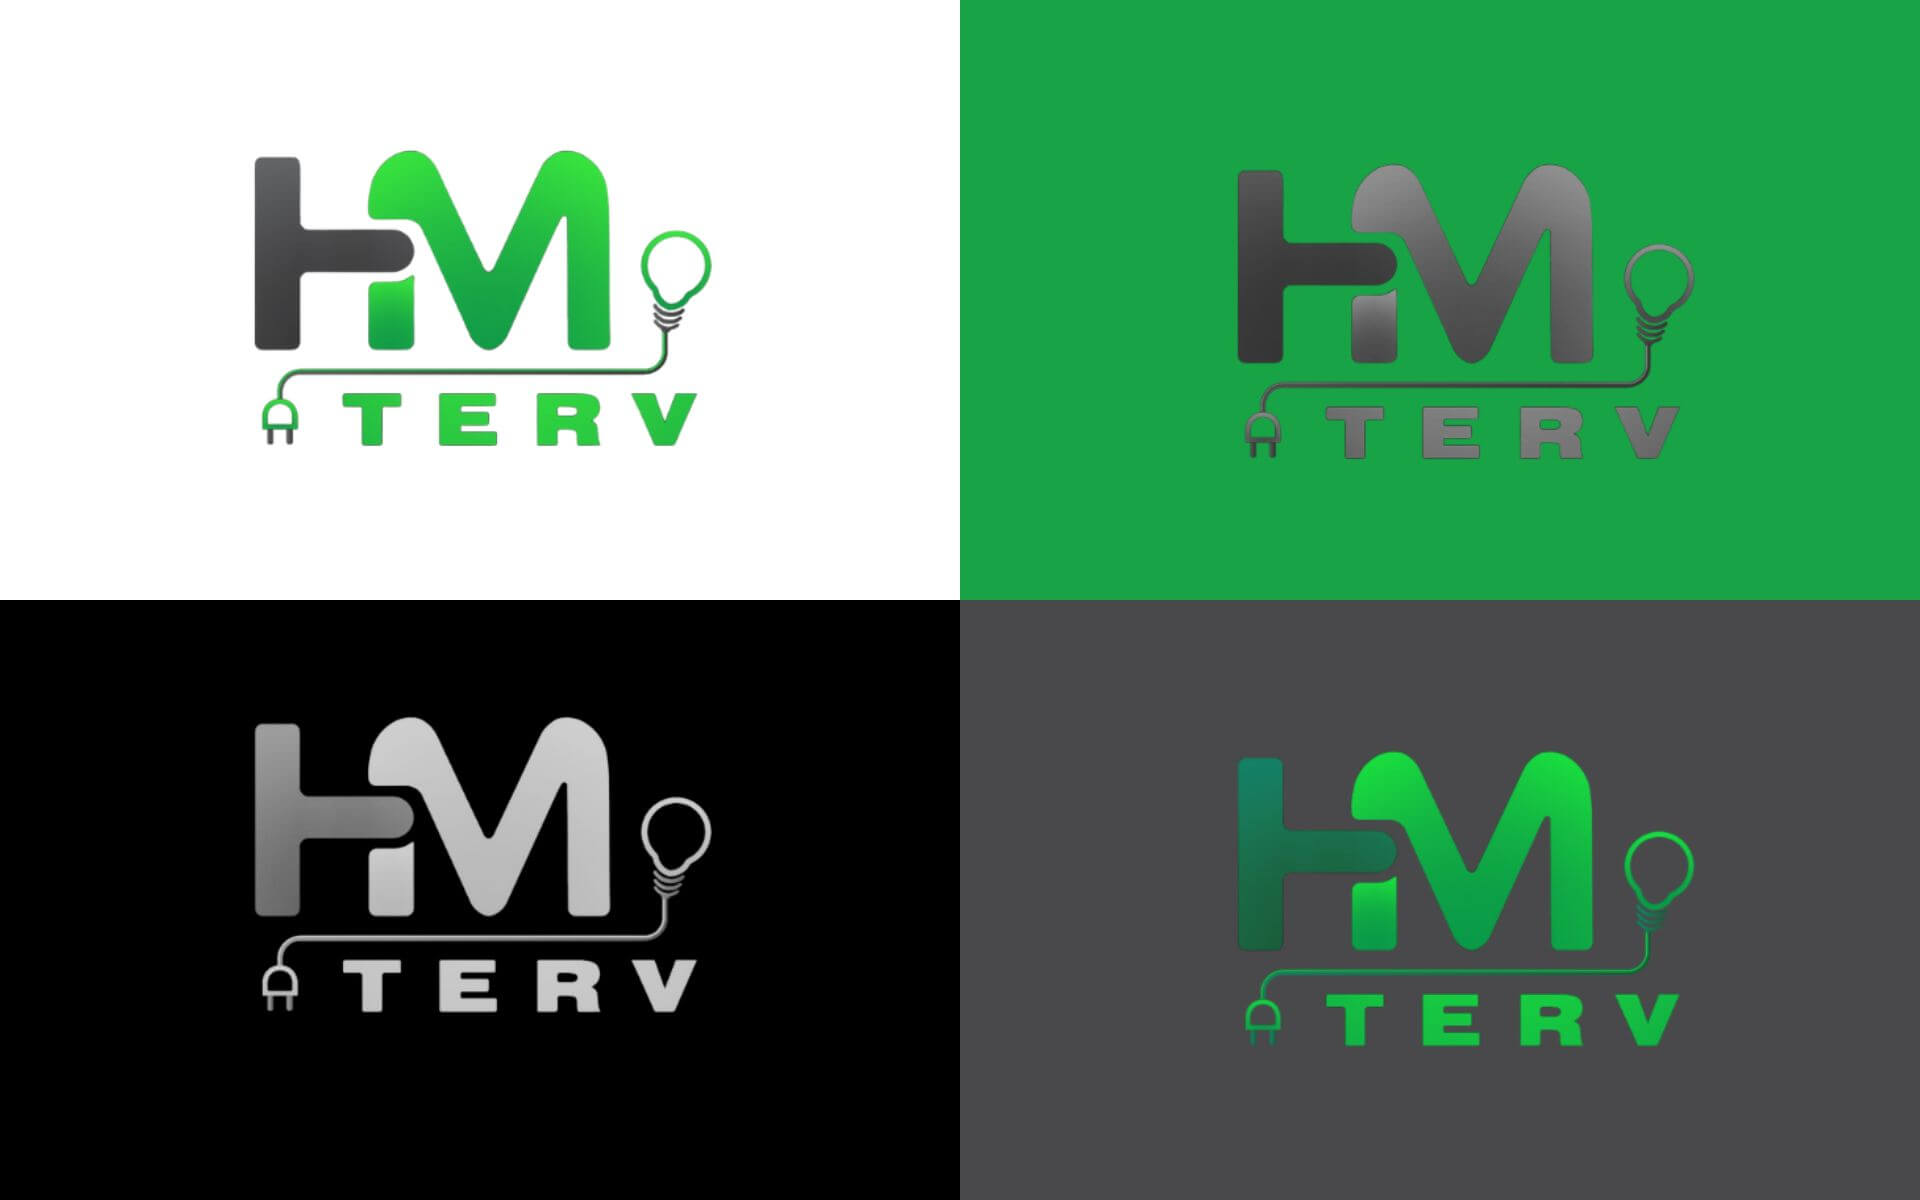 hm-terv-logo-var-bizzi-design-brand-design